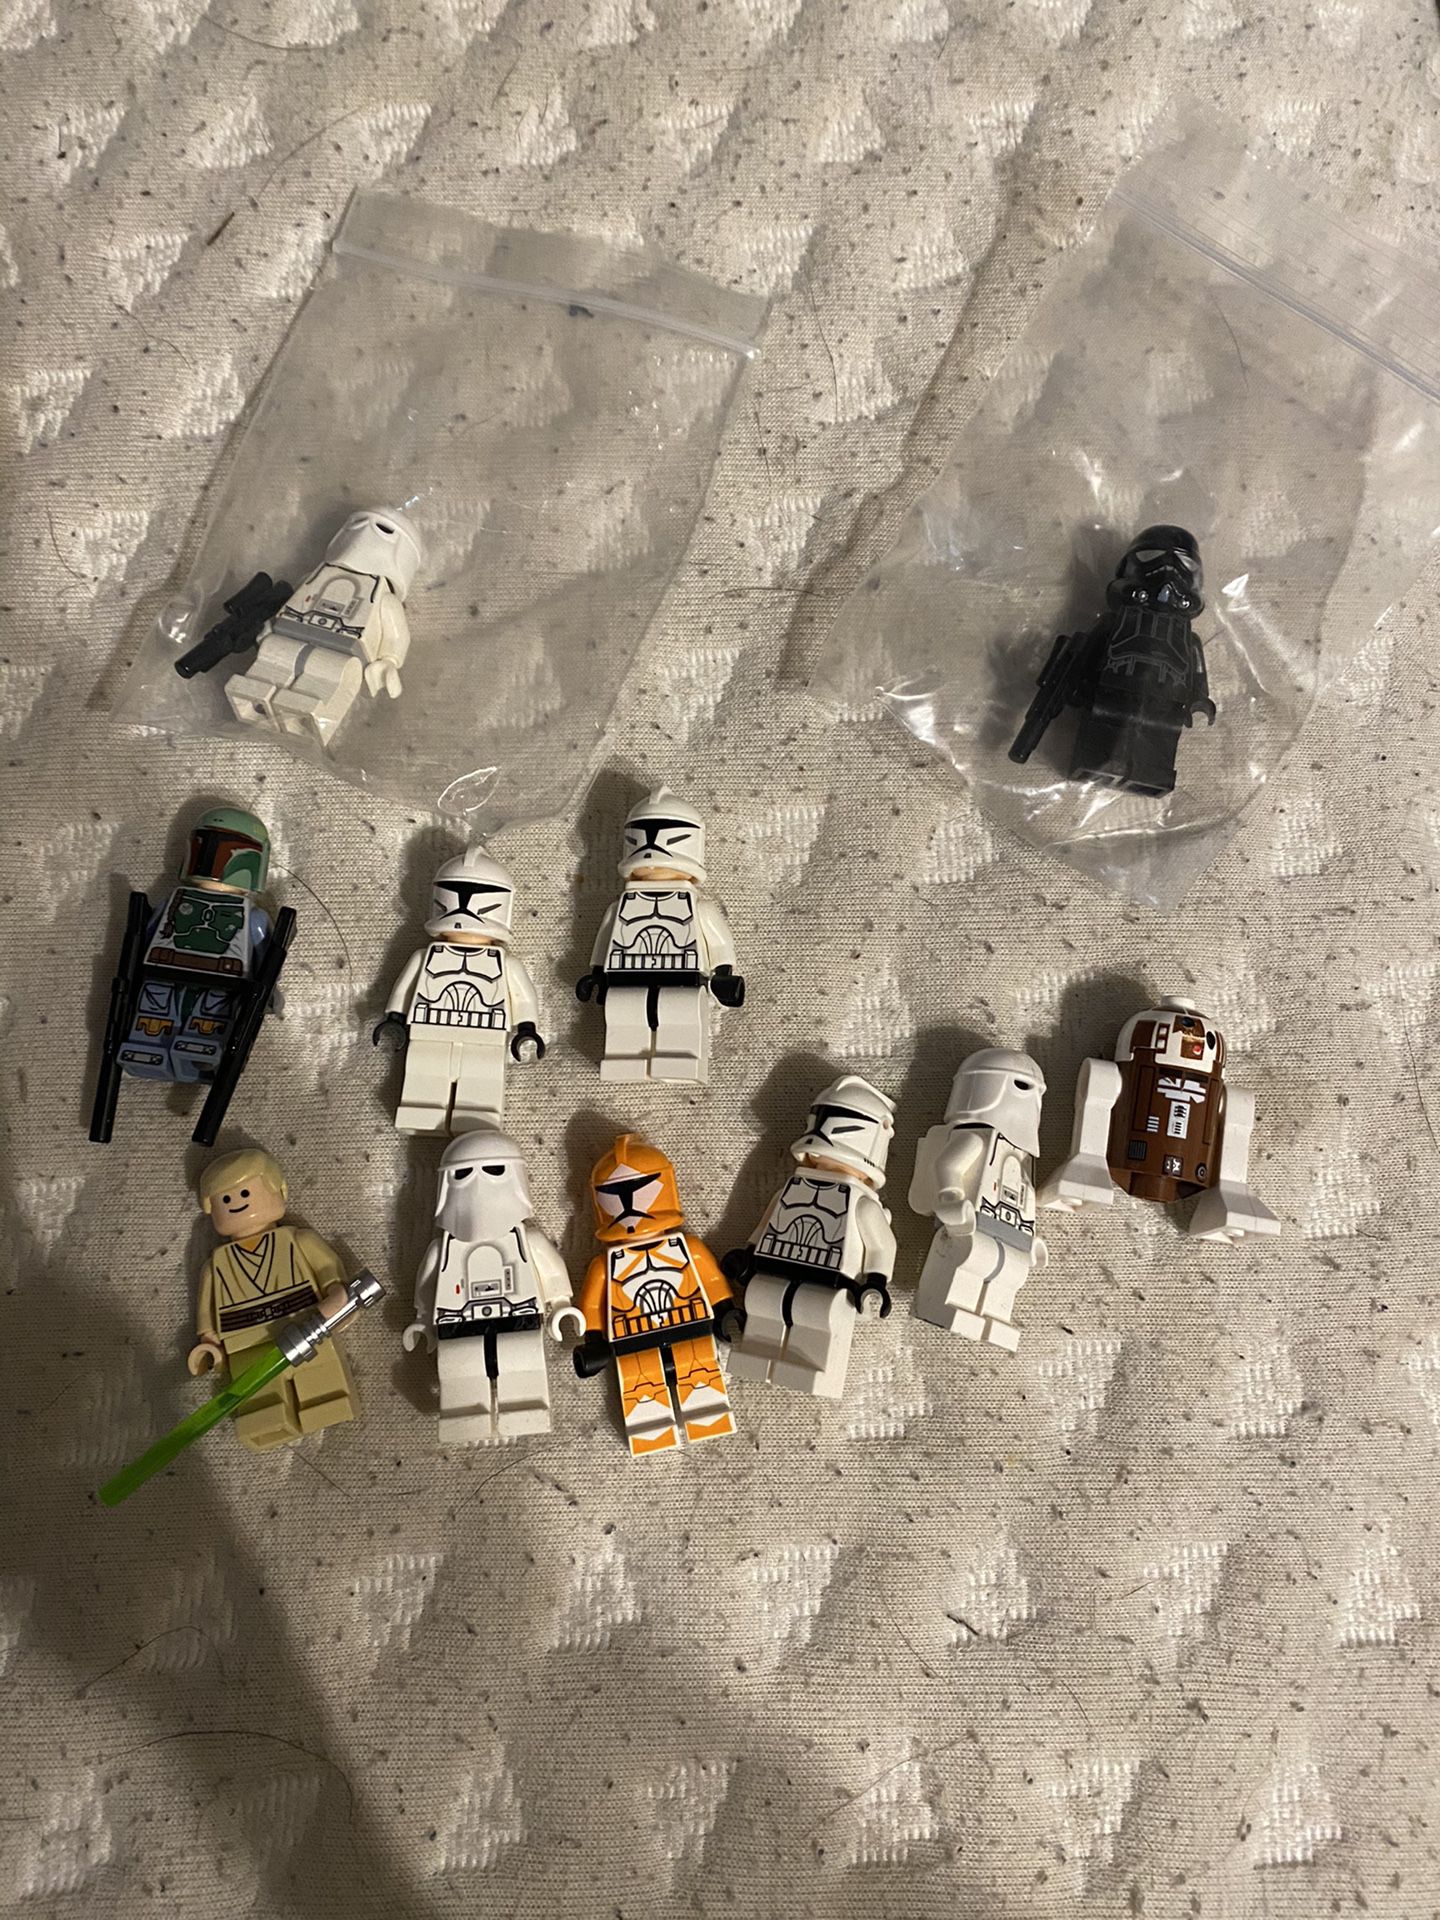 Stars wars LEGO figures